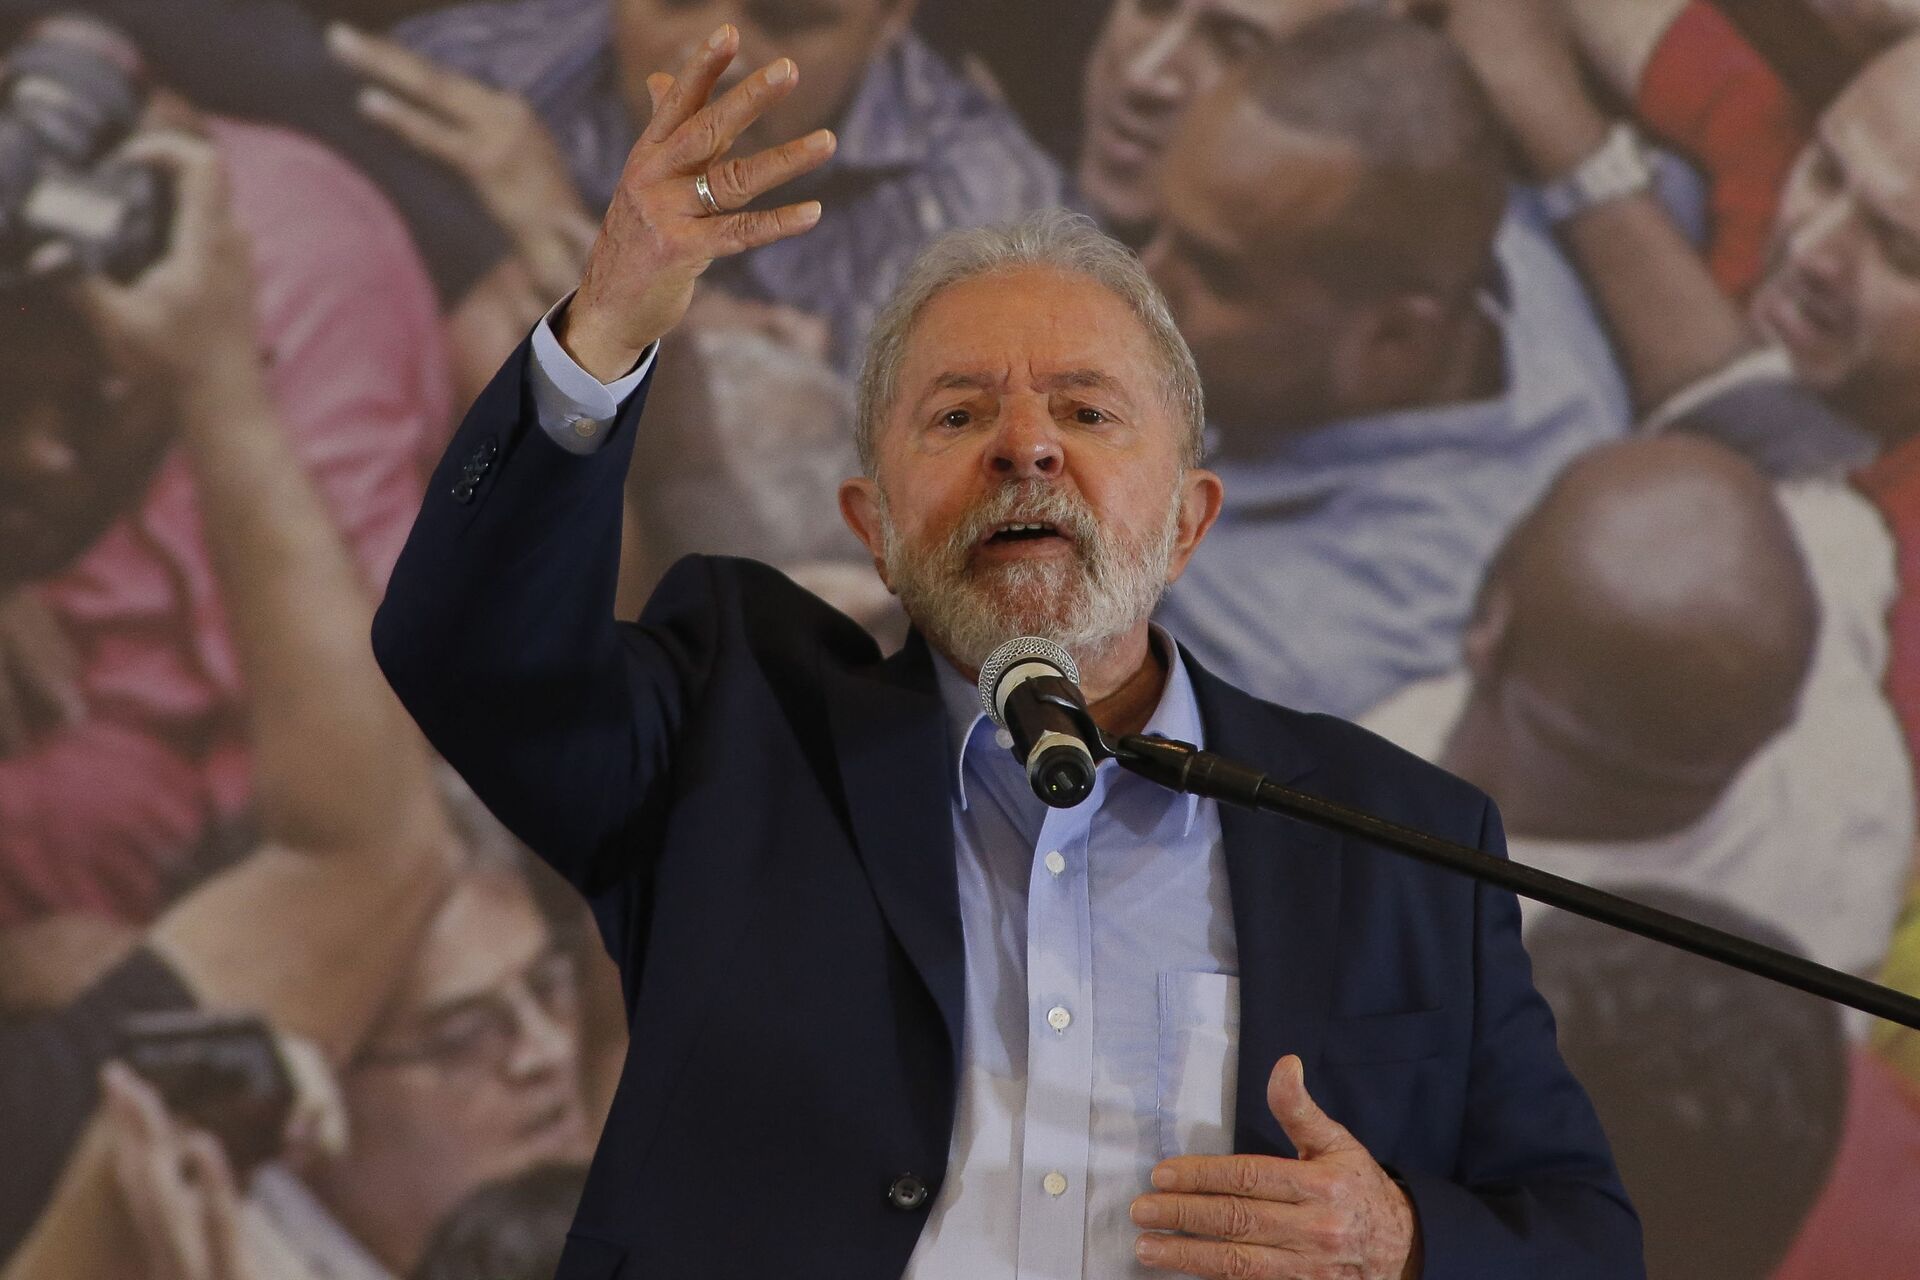 Celso Amorim: Lula is Gigantic Force in Brazil, Can Boost BRICS, Facilitate S America's Integration - Sputnik International, 1920, 13.04.2021